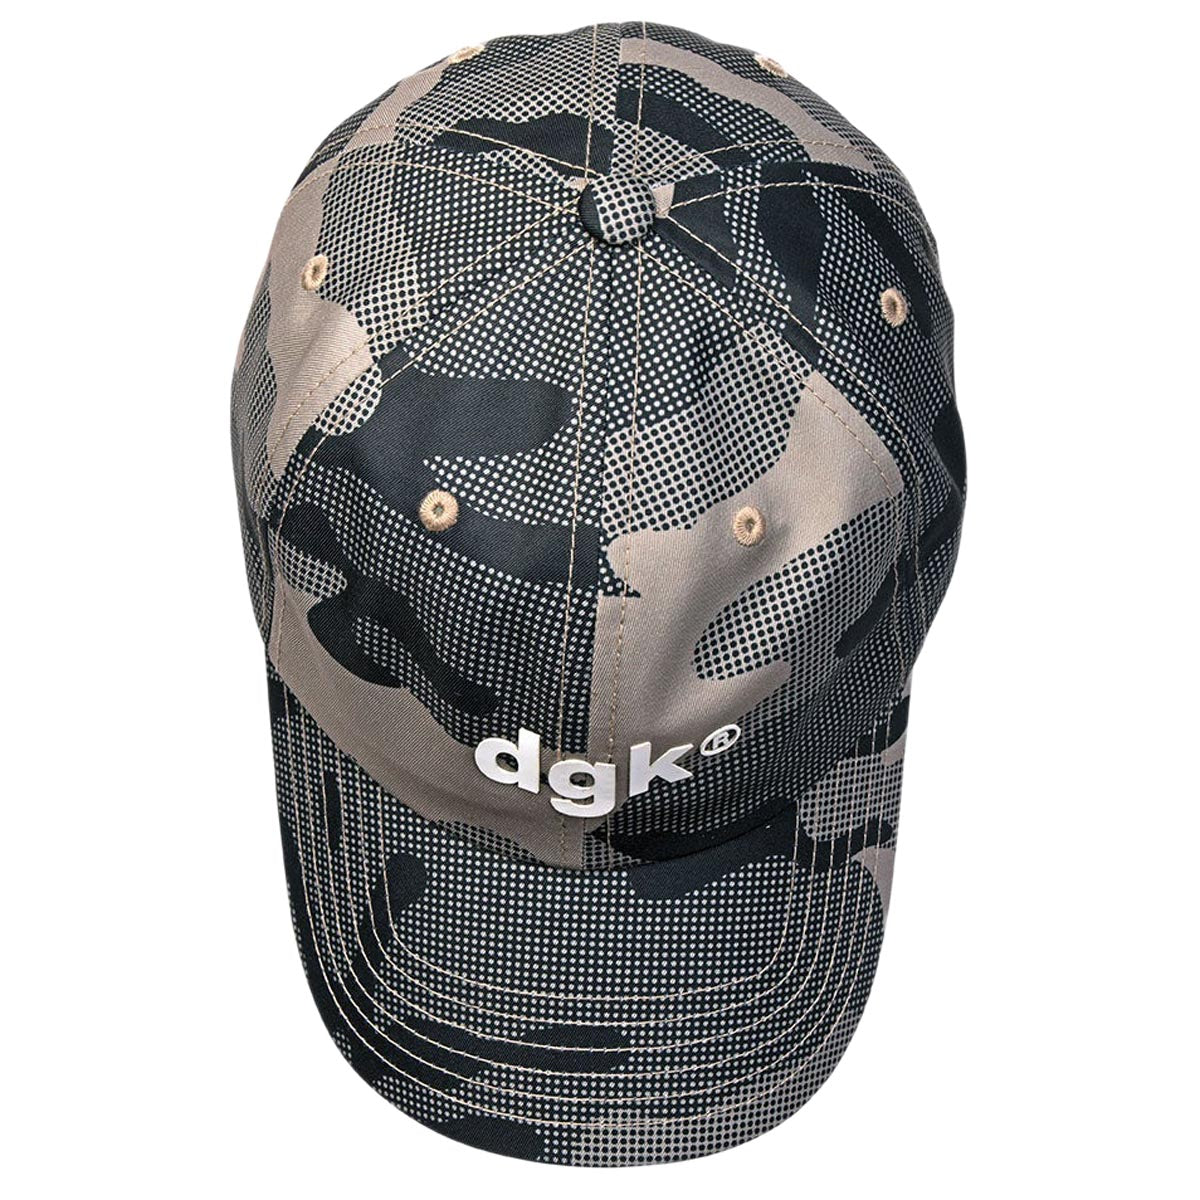 DGK Contra Strapback Hat - Black Camo image 4